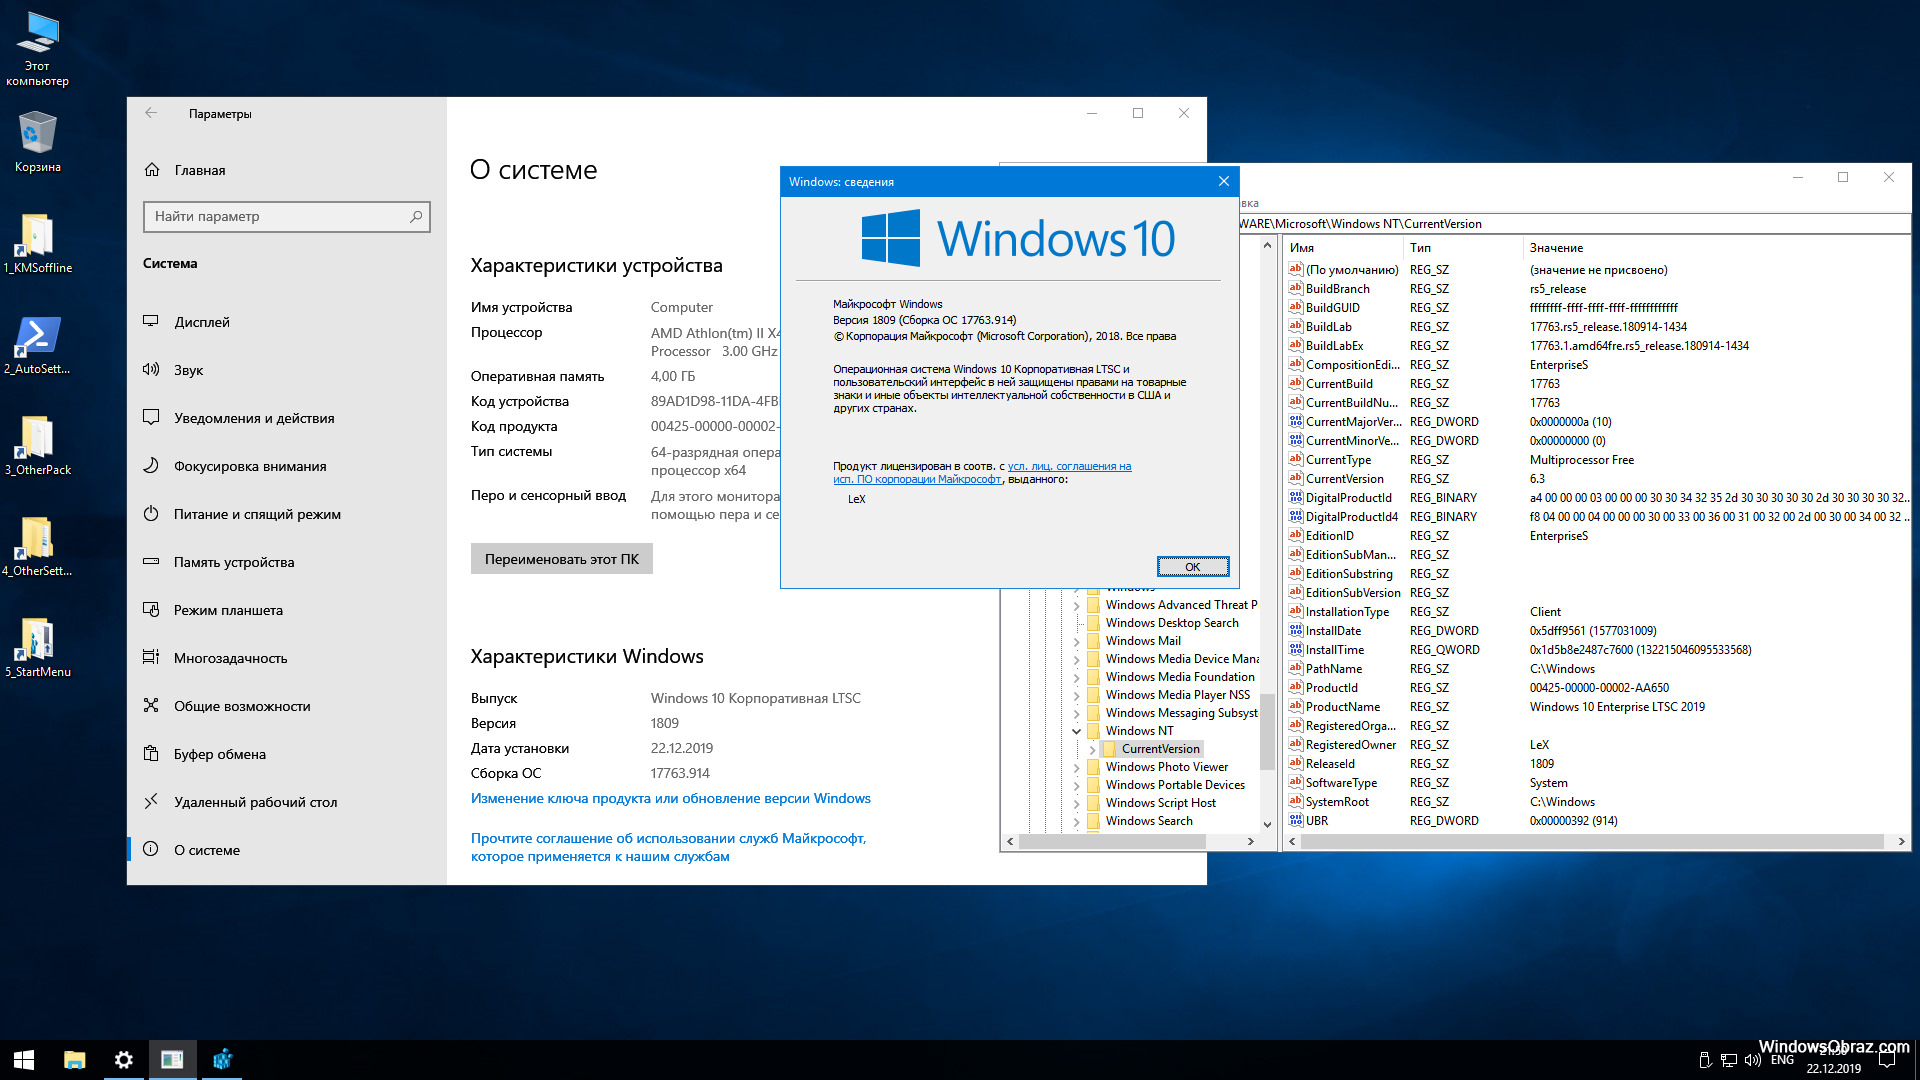 Бесплатная версия win 10 x64. Windows 10 Enterprise (корпоративная). Винда 10. Редакции виндовс 10. Система виндовс 10.